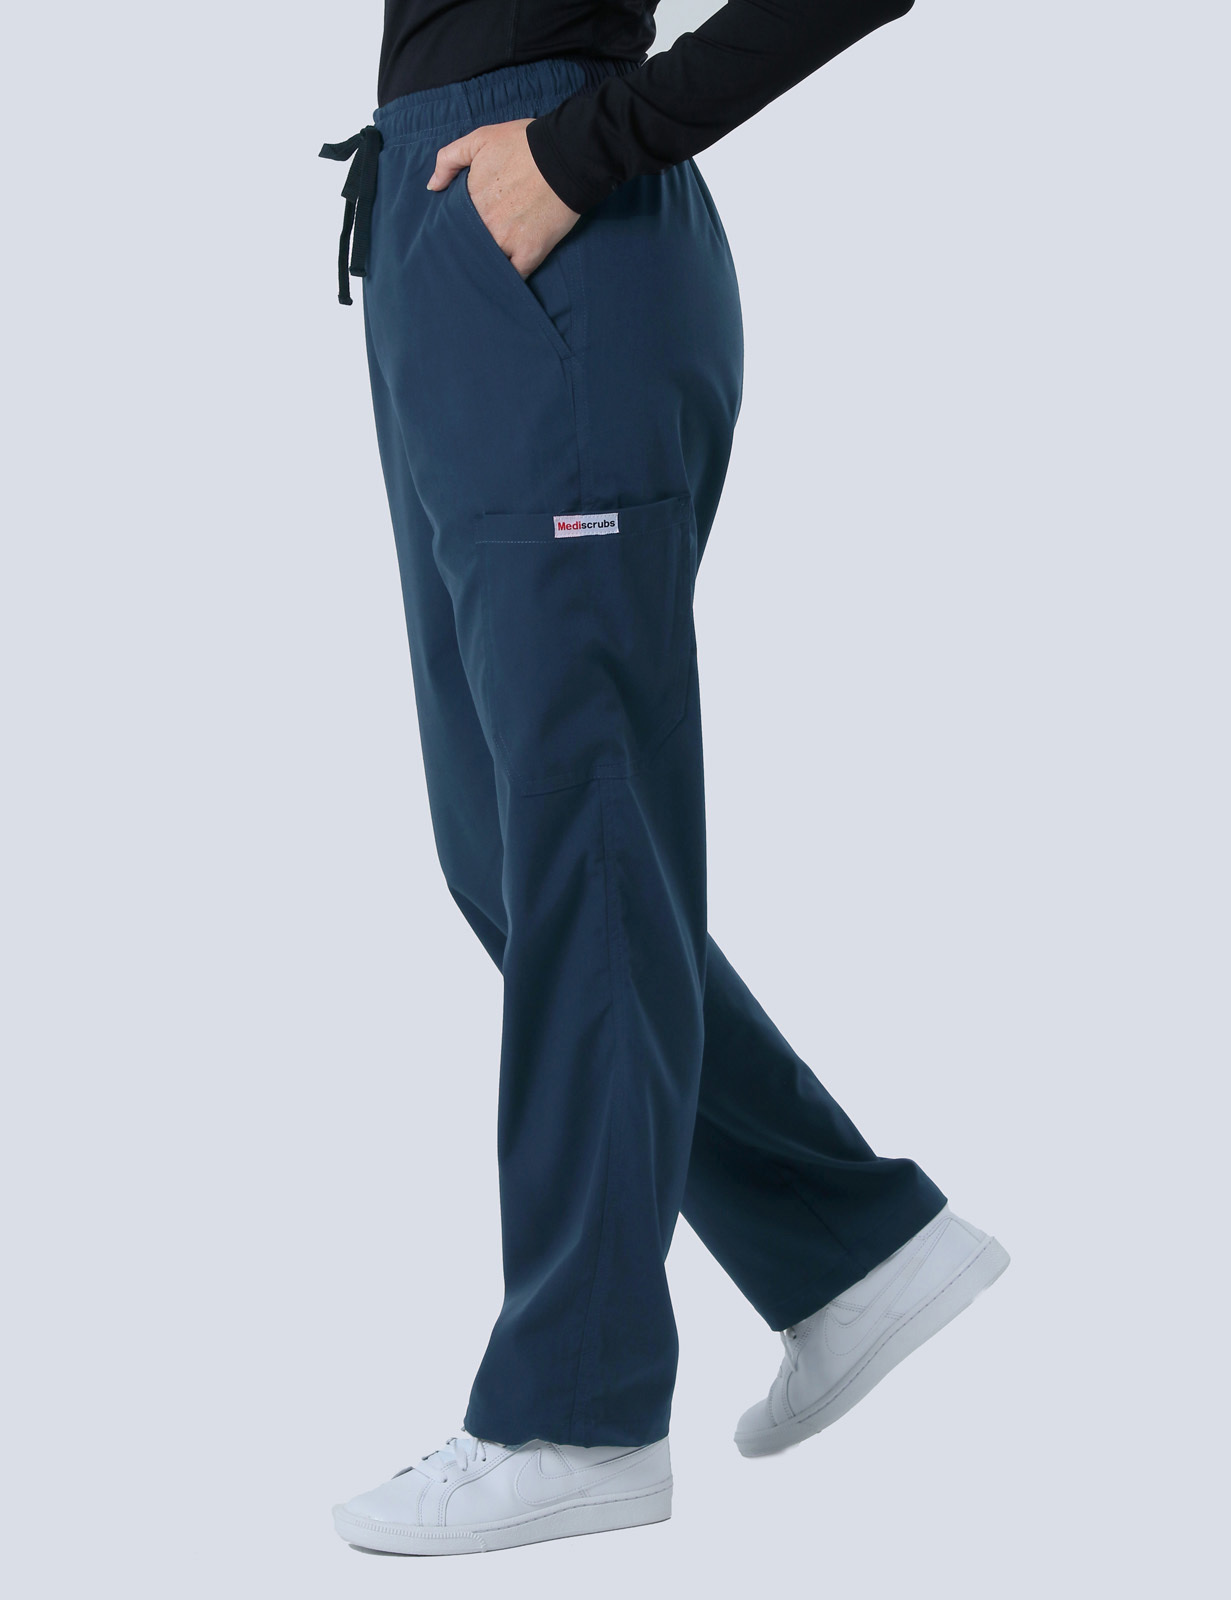 Royal Hobart Hospital - Emergency Doctor (4 Pocket Scrub Top in Navy and Cargo Pants incl Logos)